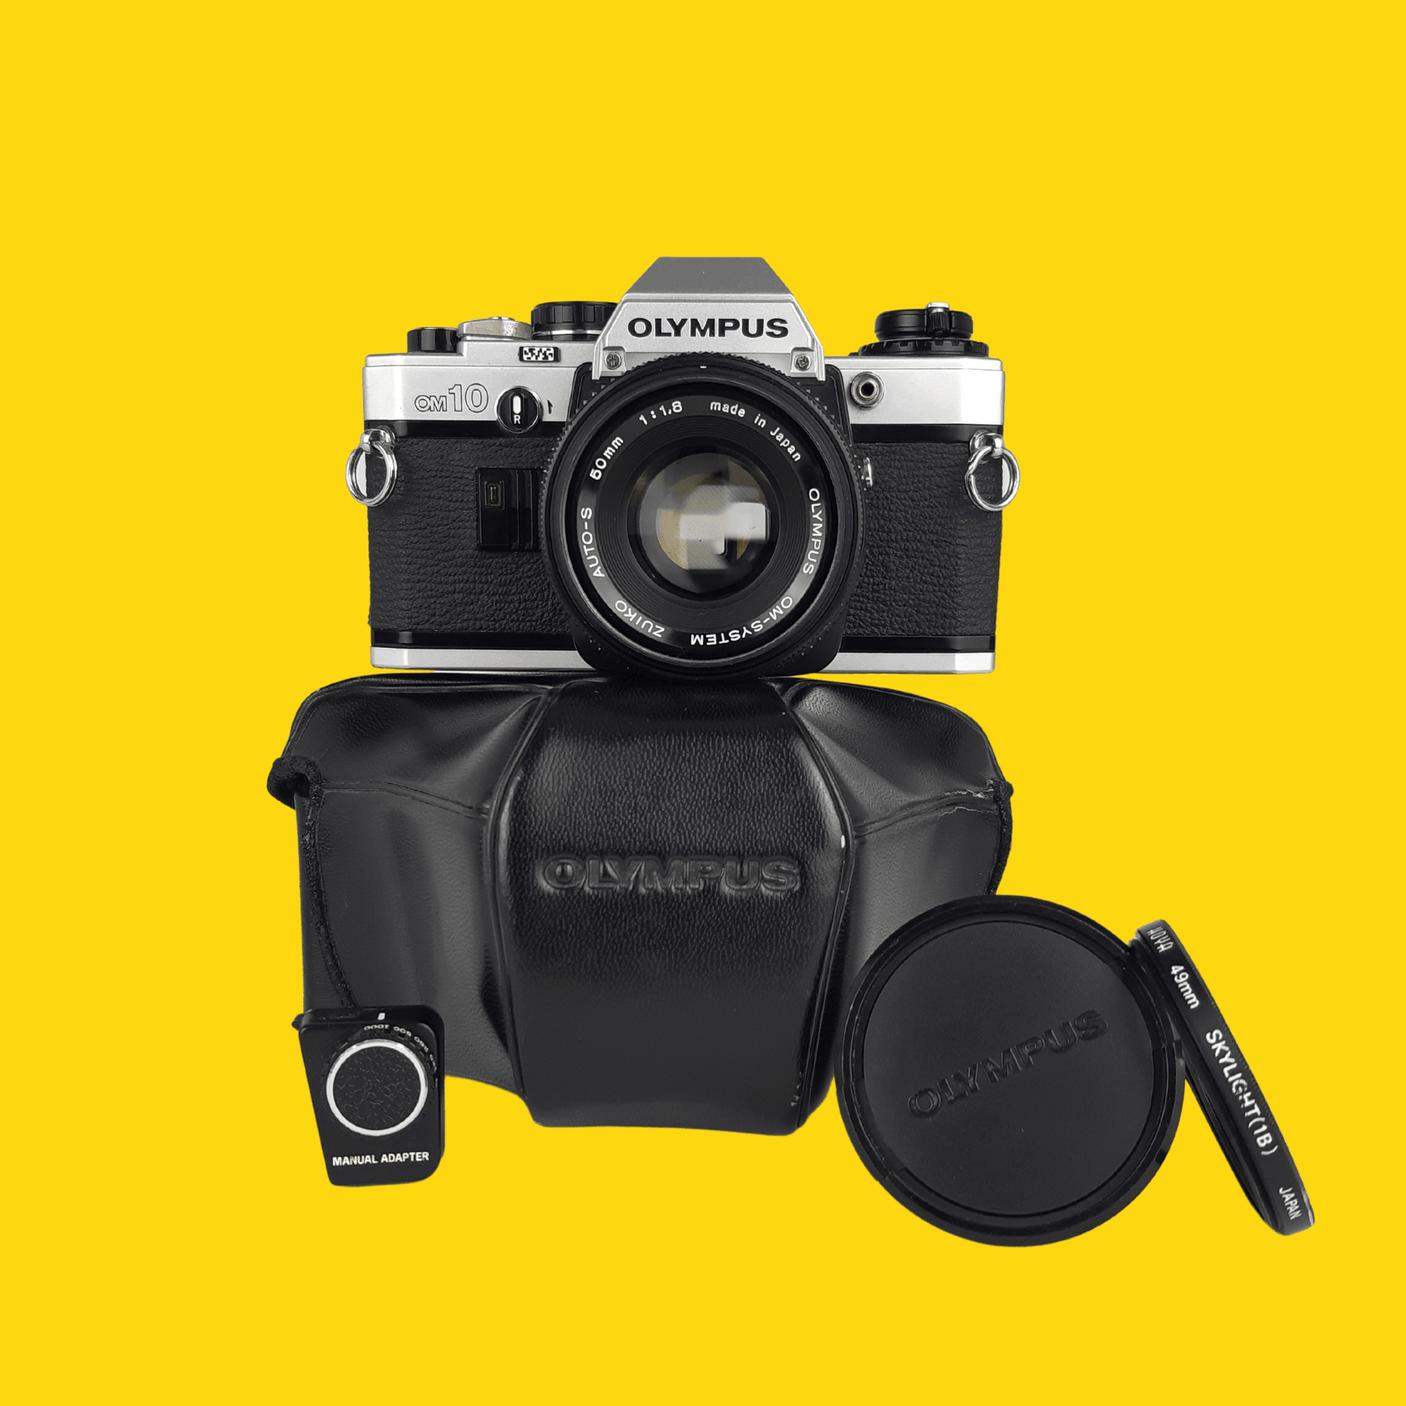 Olympus OM10 35mm SLR Film Camera w/ 50mm f/1.8 lens, Lens Cap, Leather Case & Filter